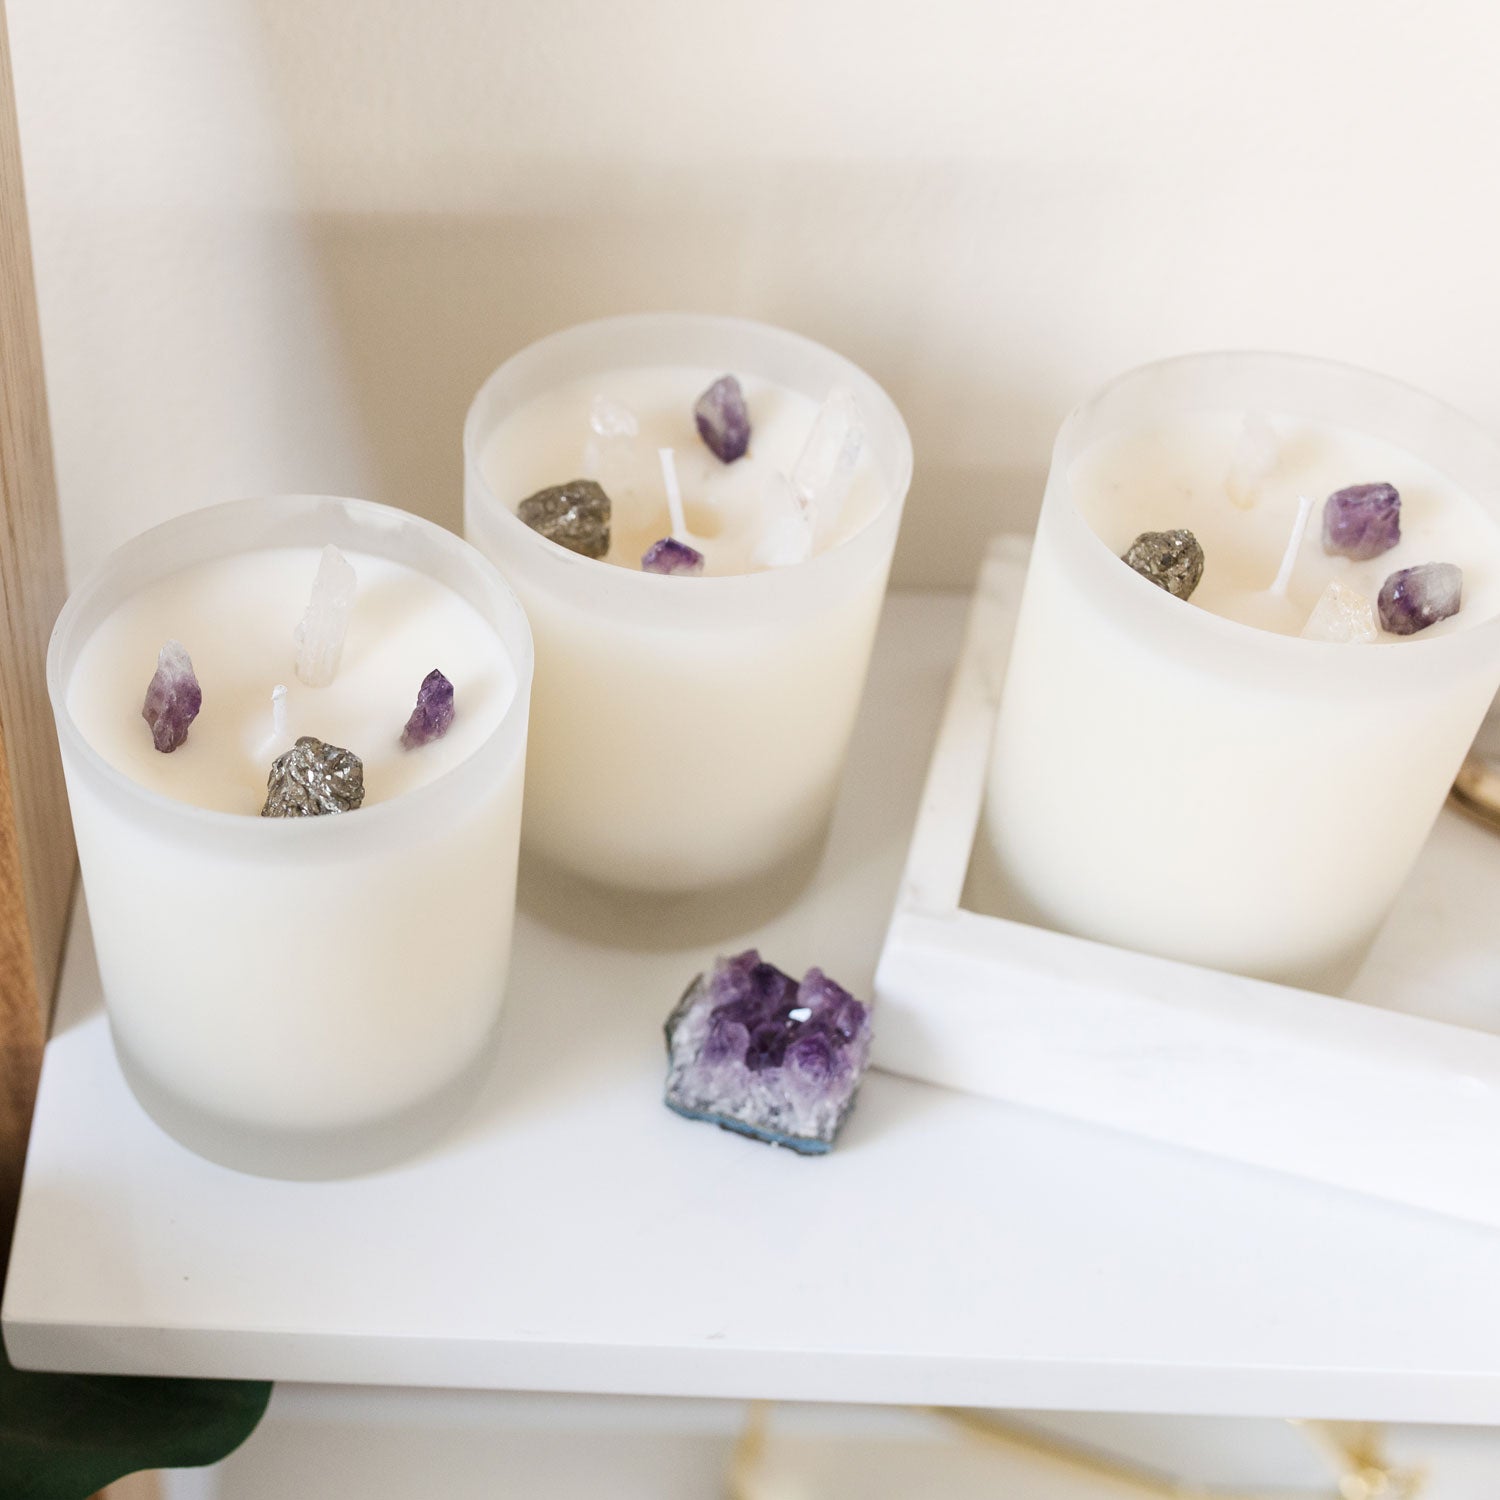 Gemstone Candles DIY, How To Make Gemstone Candles